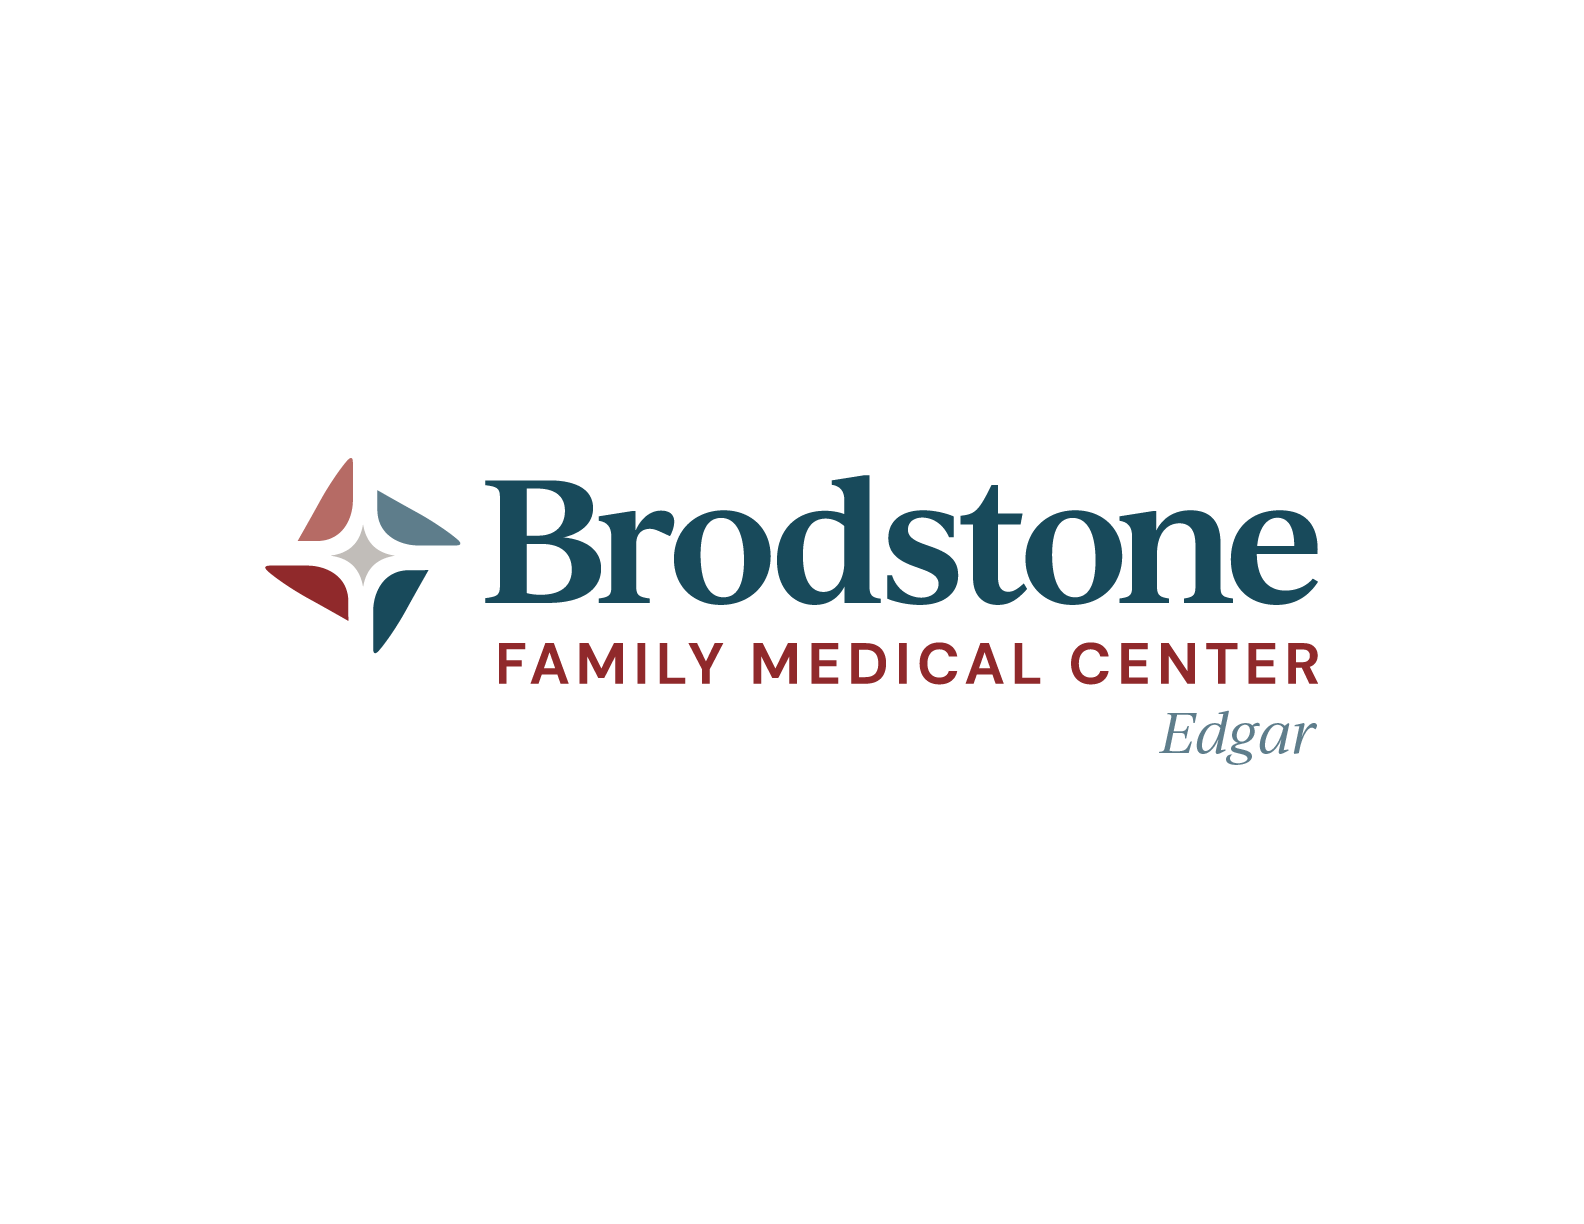 Brodstone Healthcare Brand Guide Edgar 